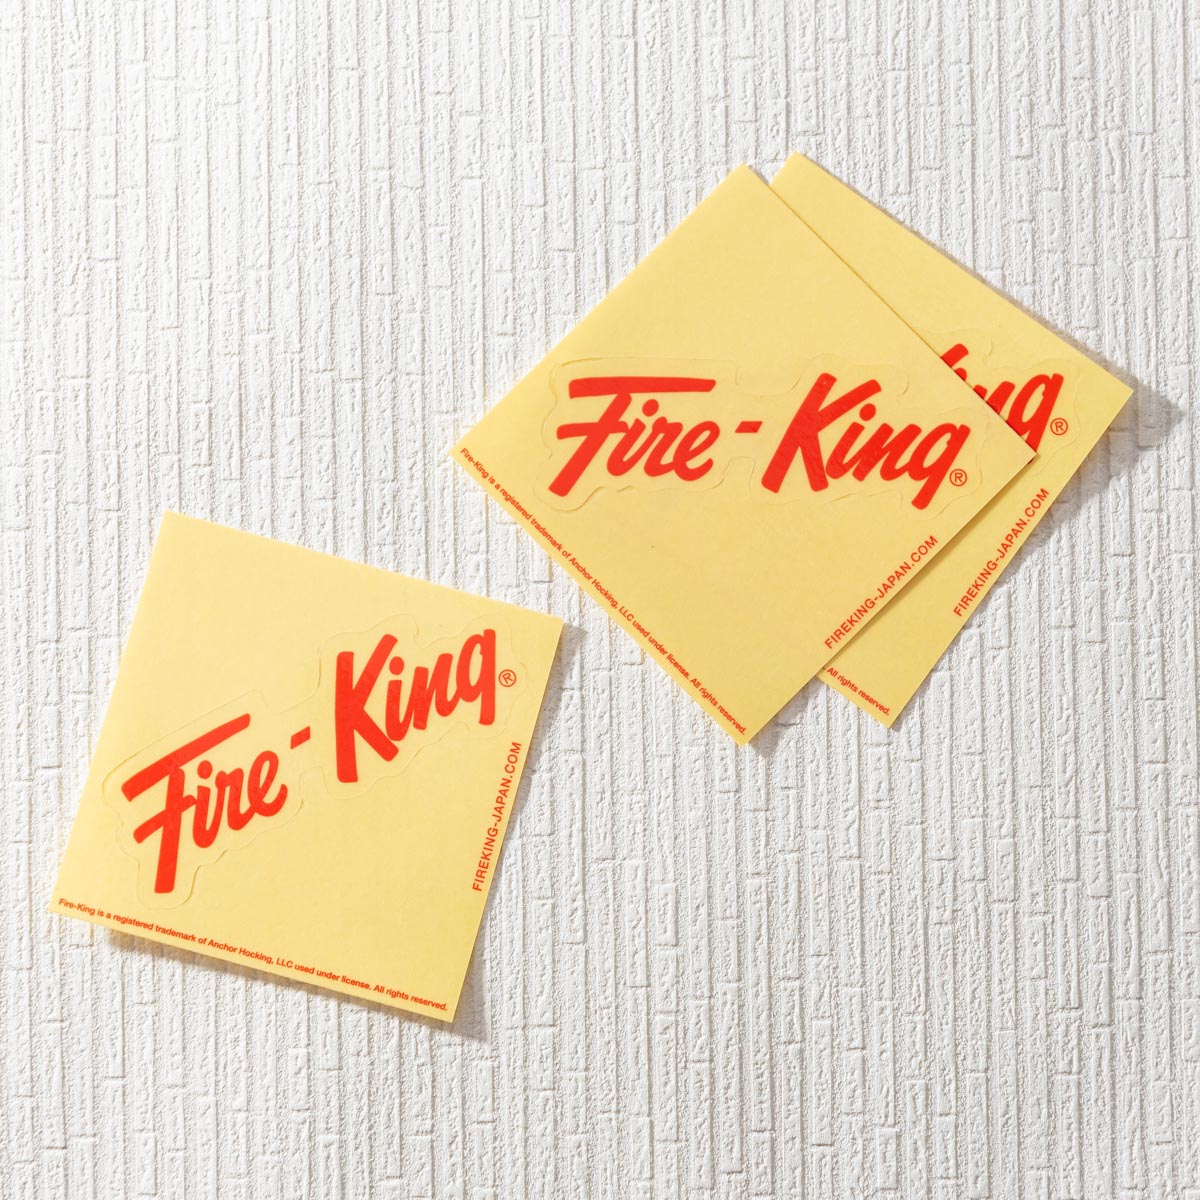 NEWS (ニュース) | Fire-King Japan オフィシャルサイト